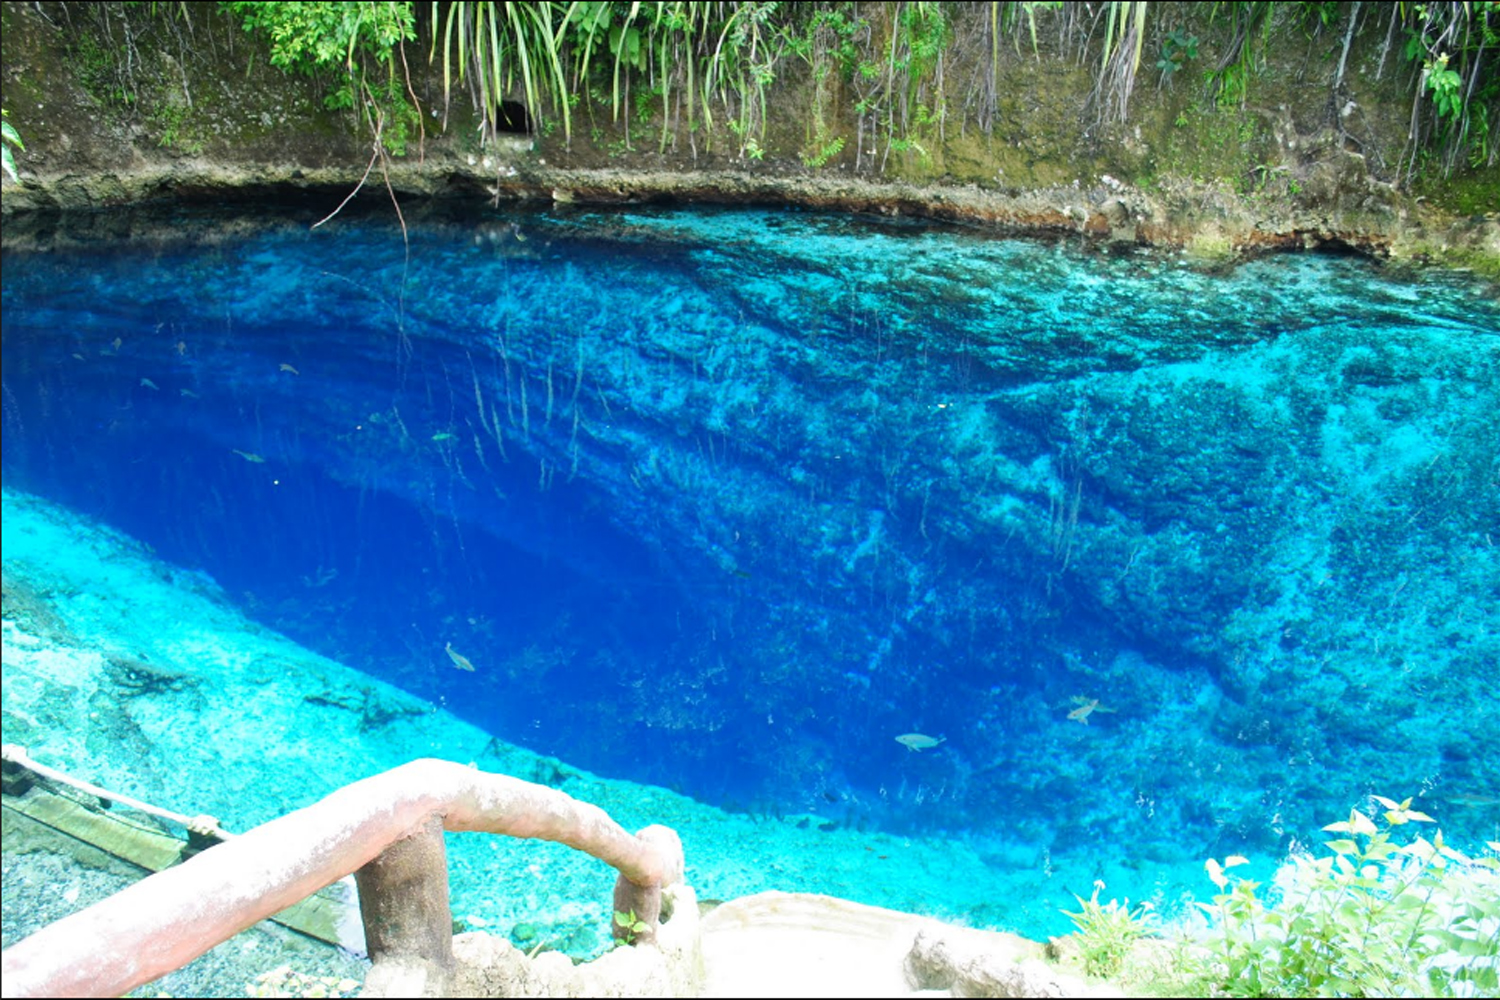 Hinatuan Enchanted River, Surigao del Sur, Philippines - secret swimming hole